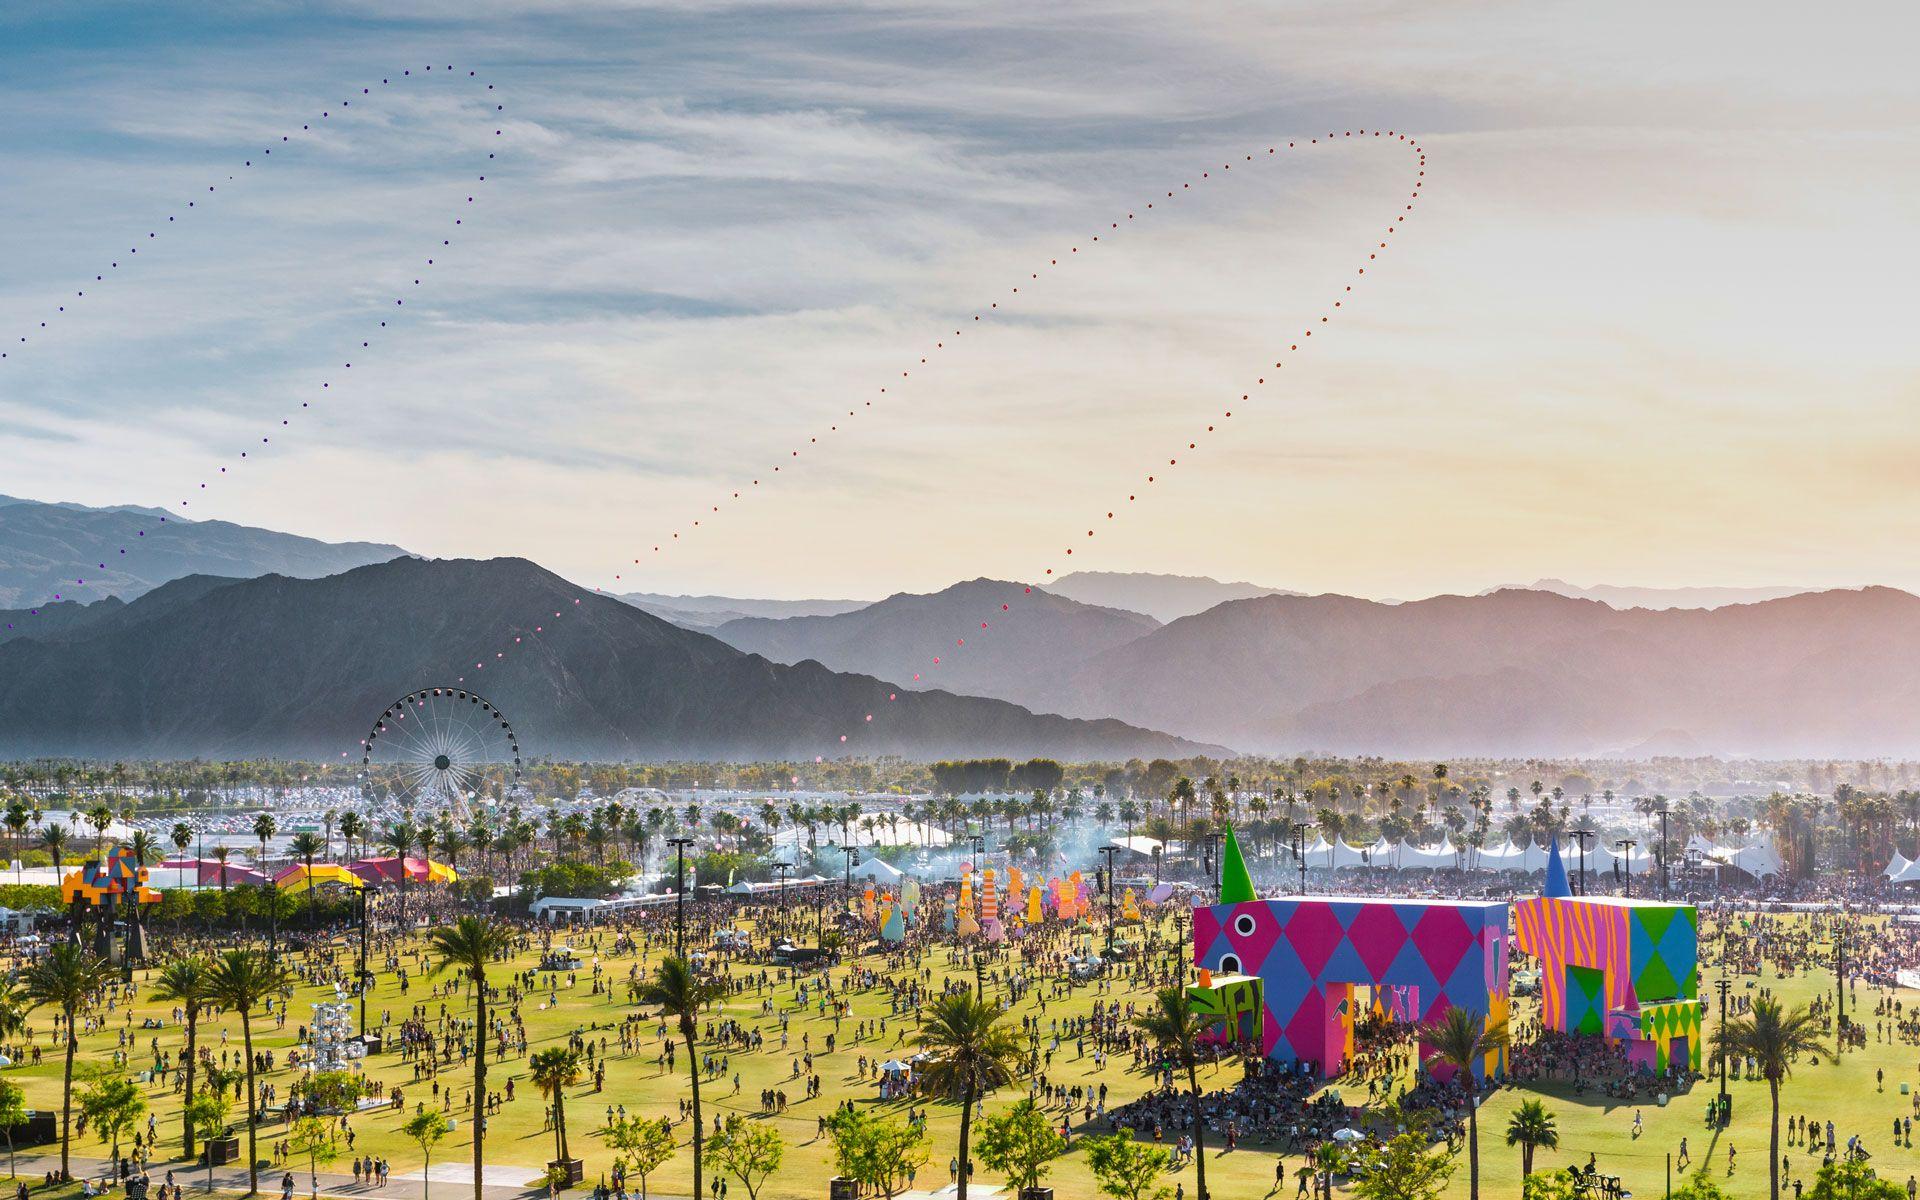 Advance sale site's backgrounds picture. : Coachella